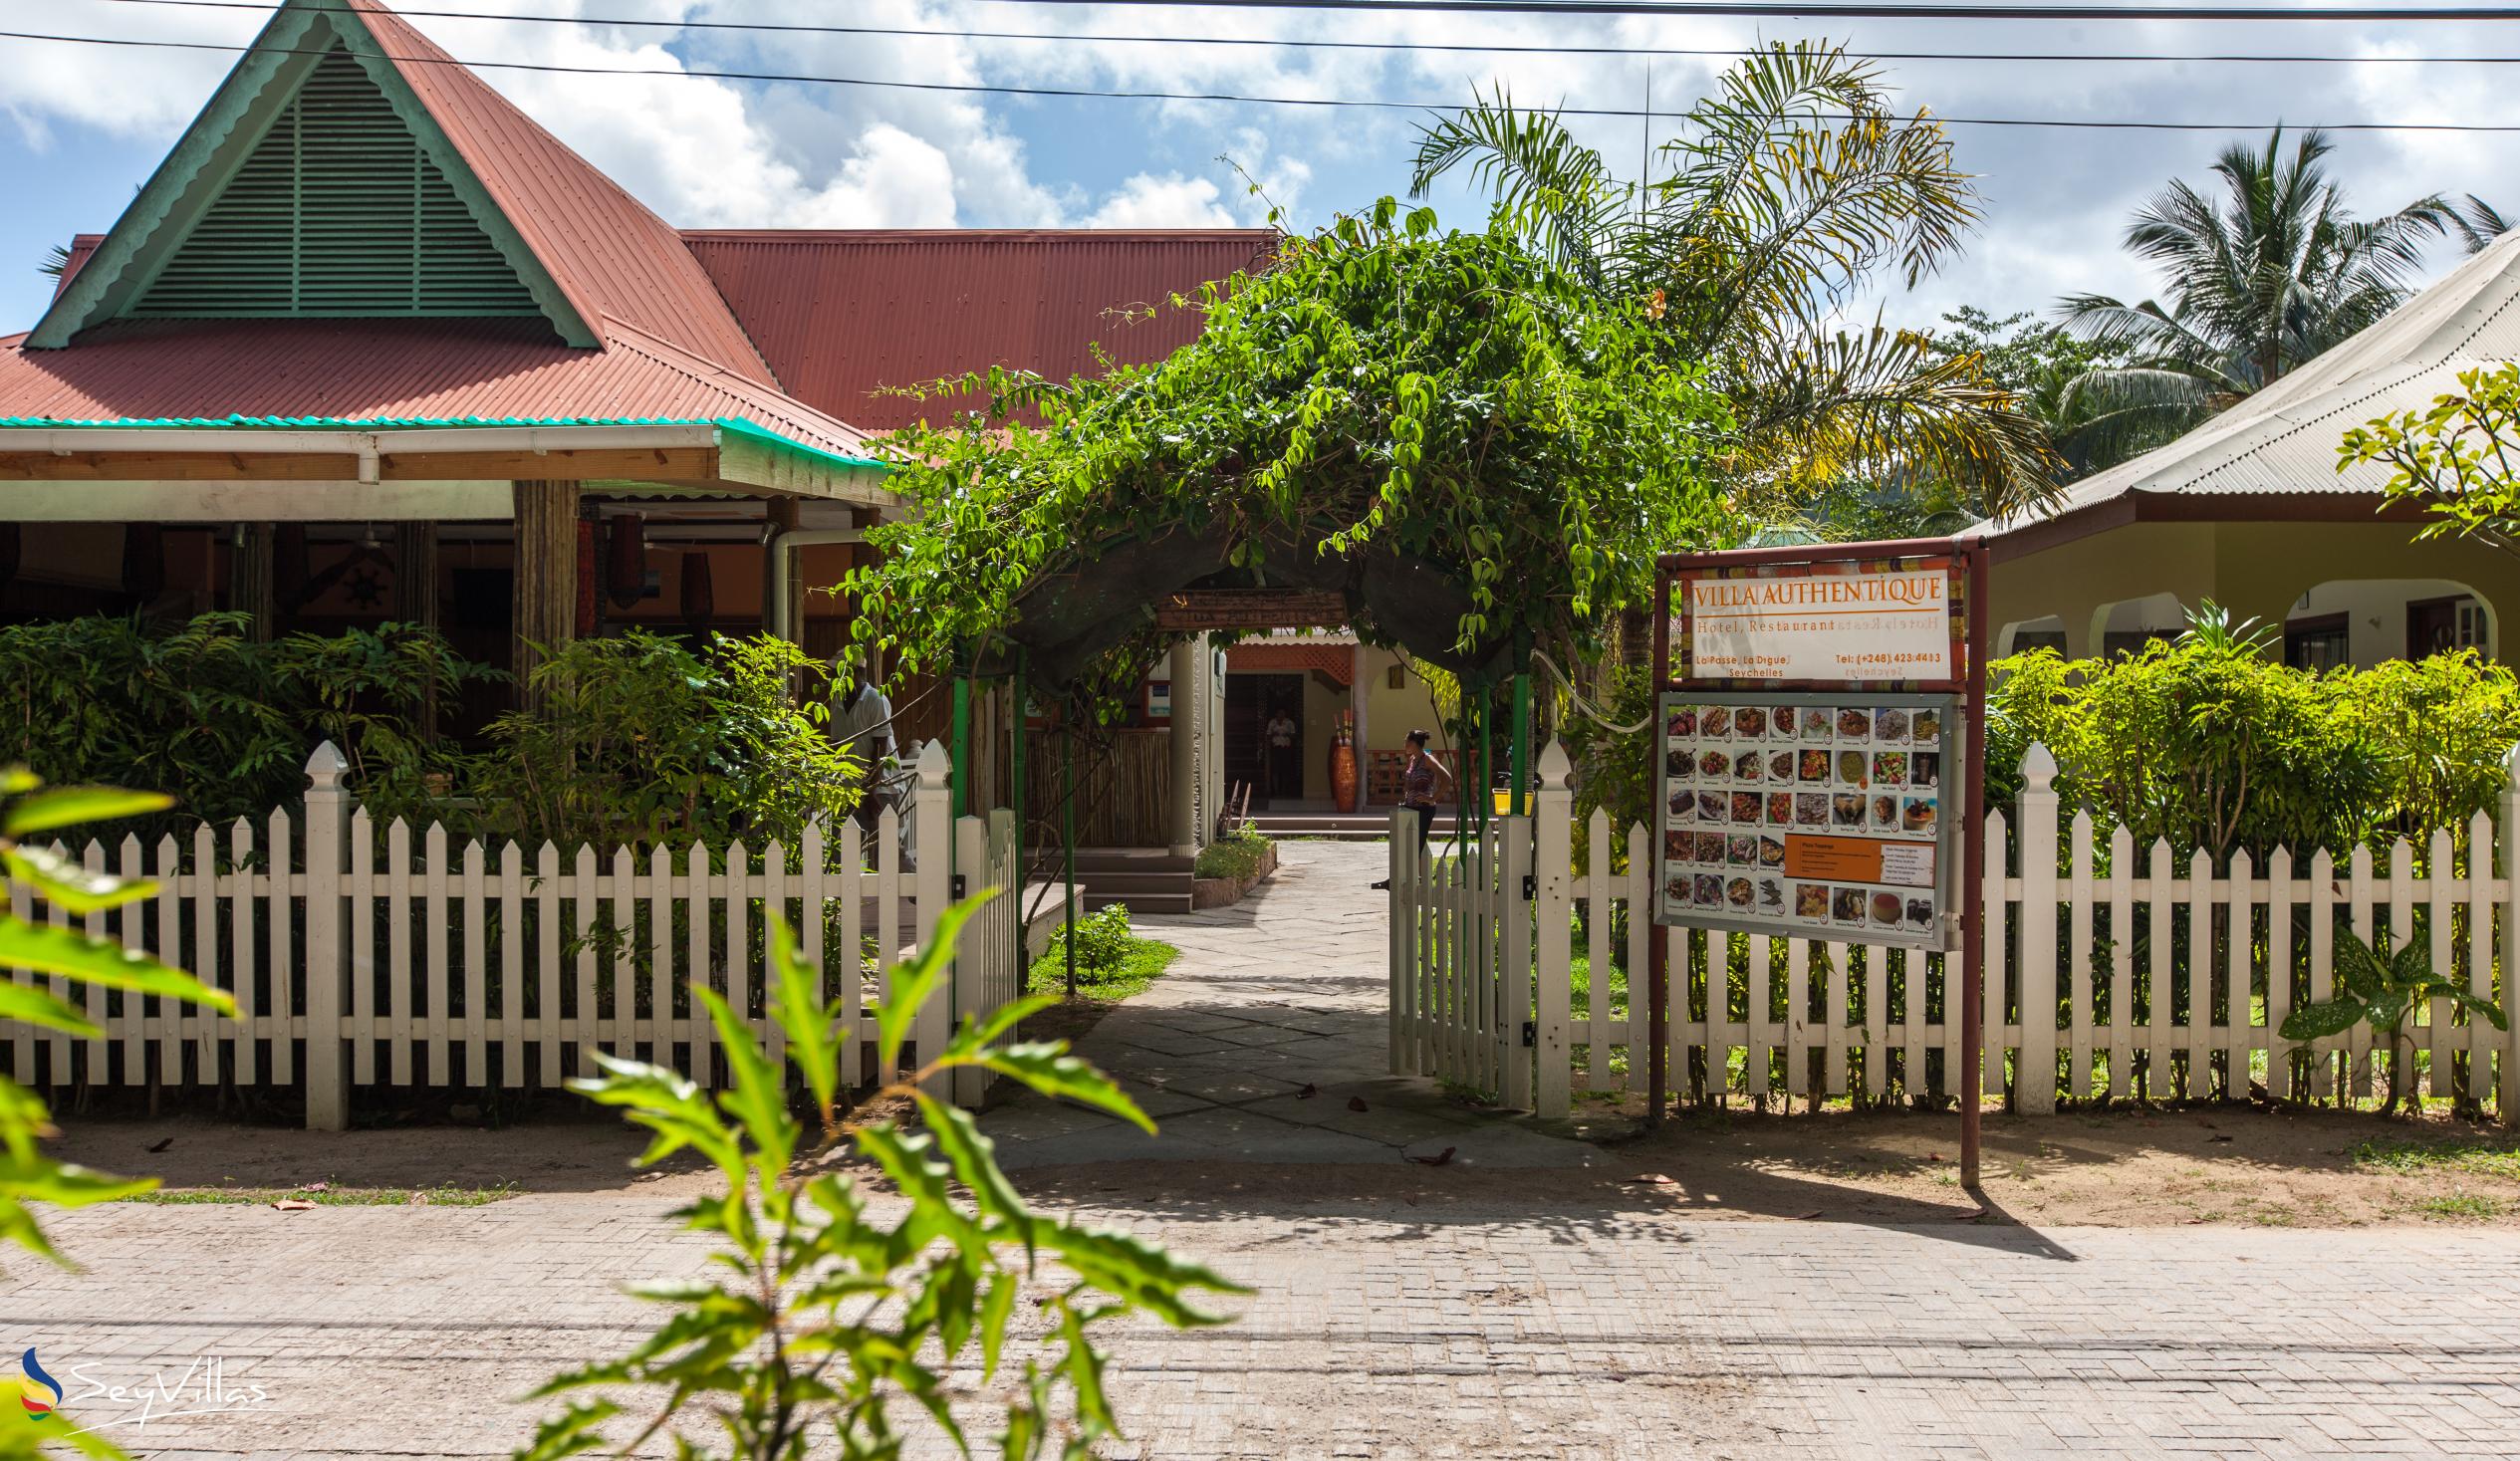 Photo 1: Villa Authentique - Outdoor area - La Digue (Seychelles)